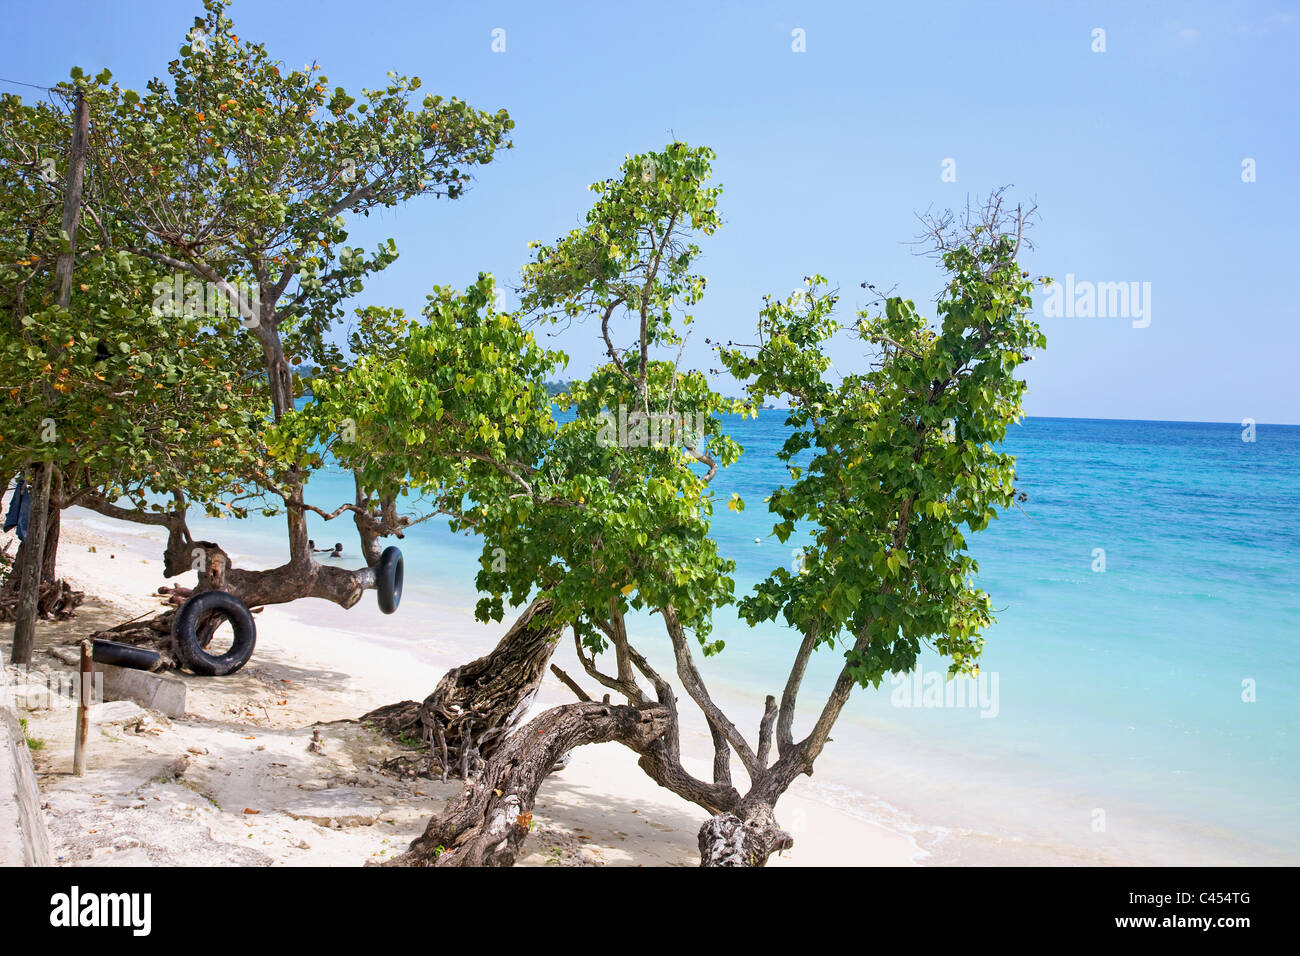 Bluefields Bay, Jamaica, sea-grape trees on beach Stock Photo